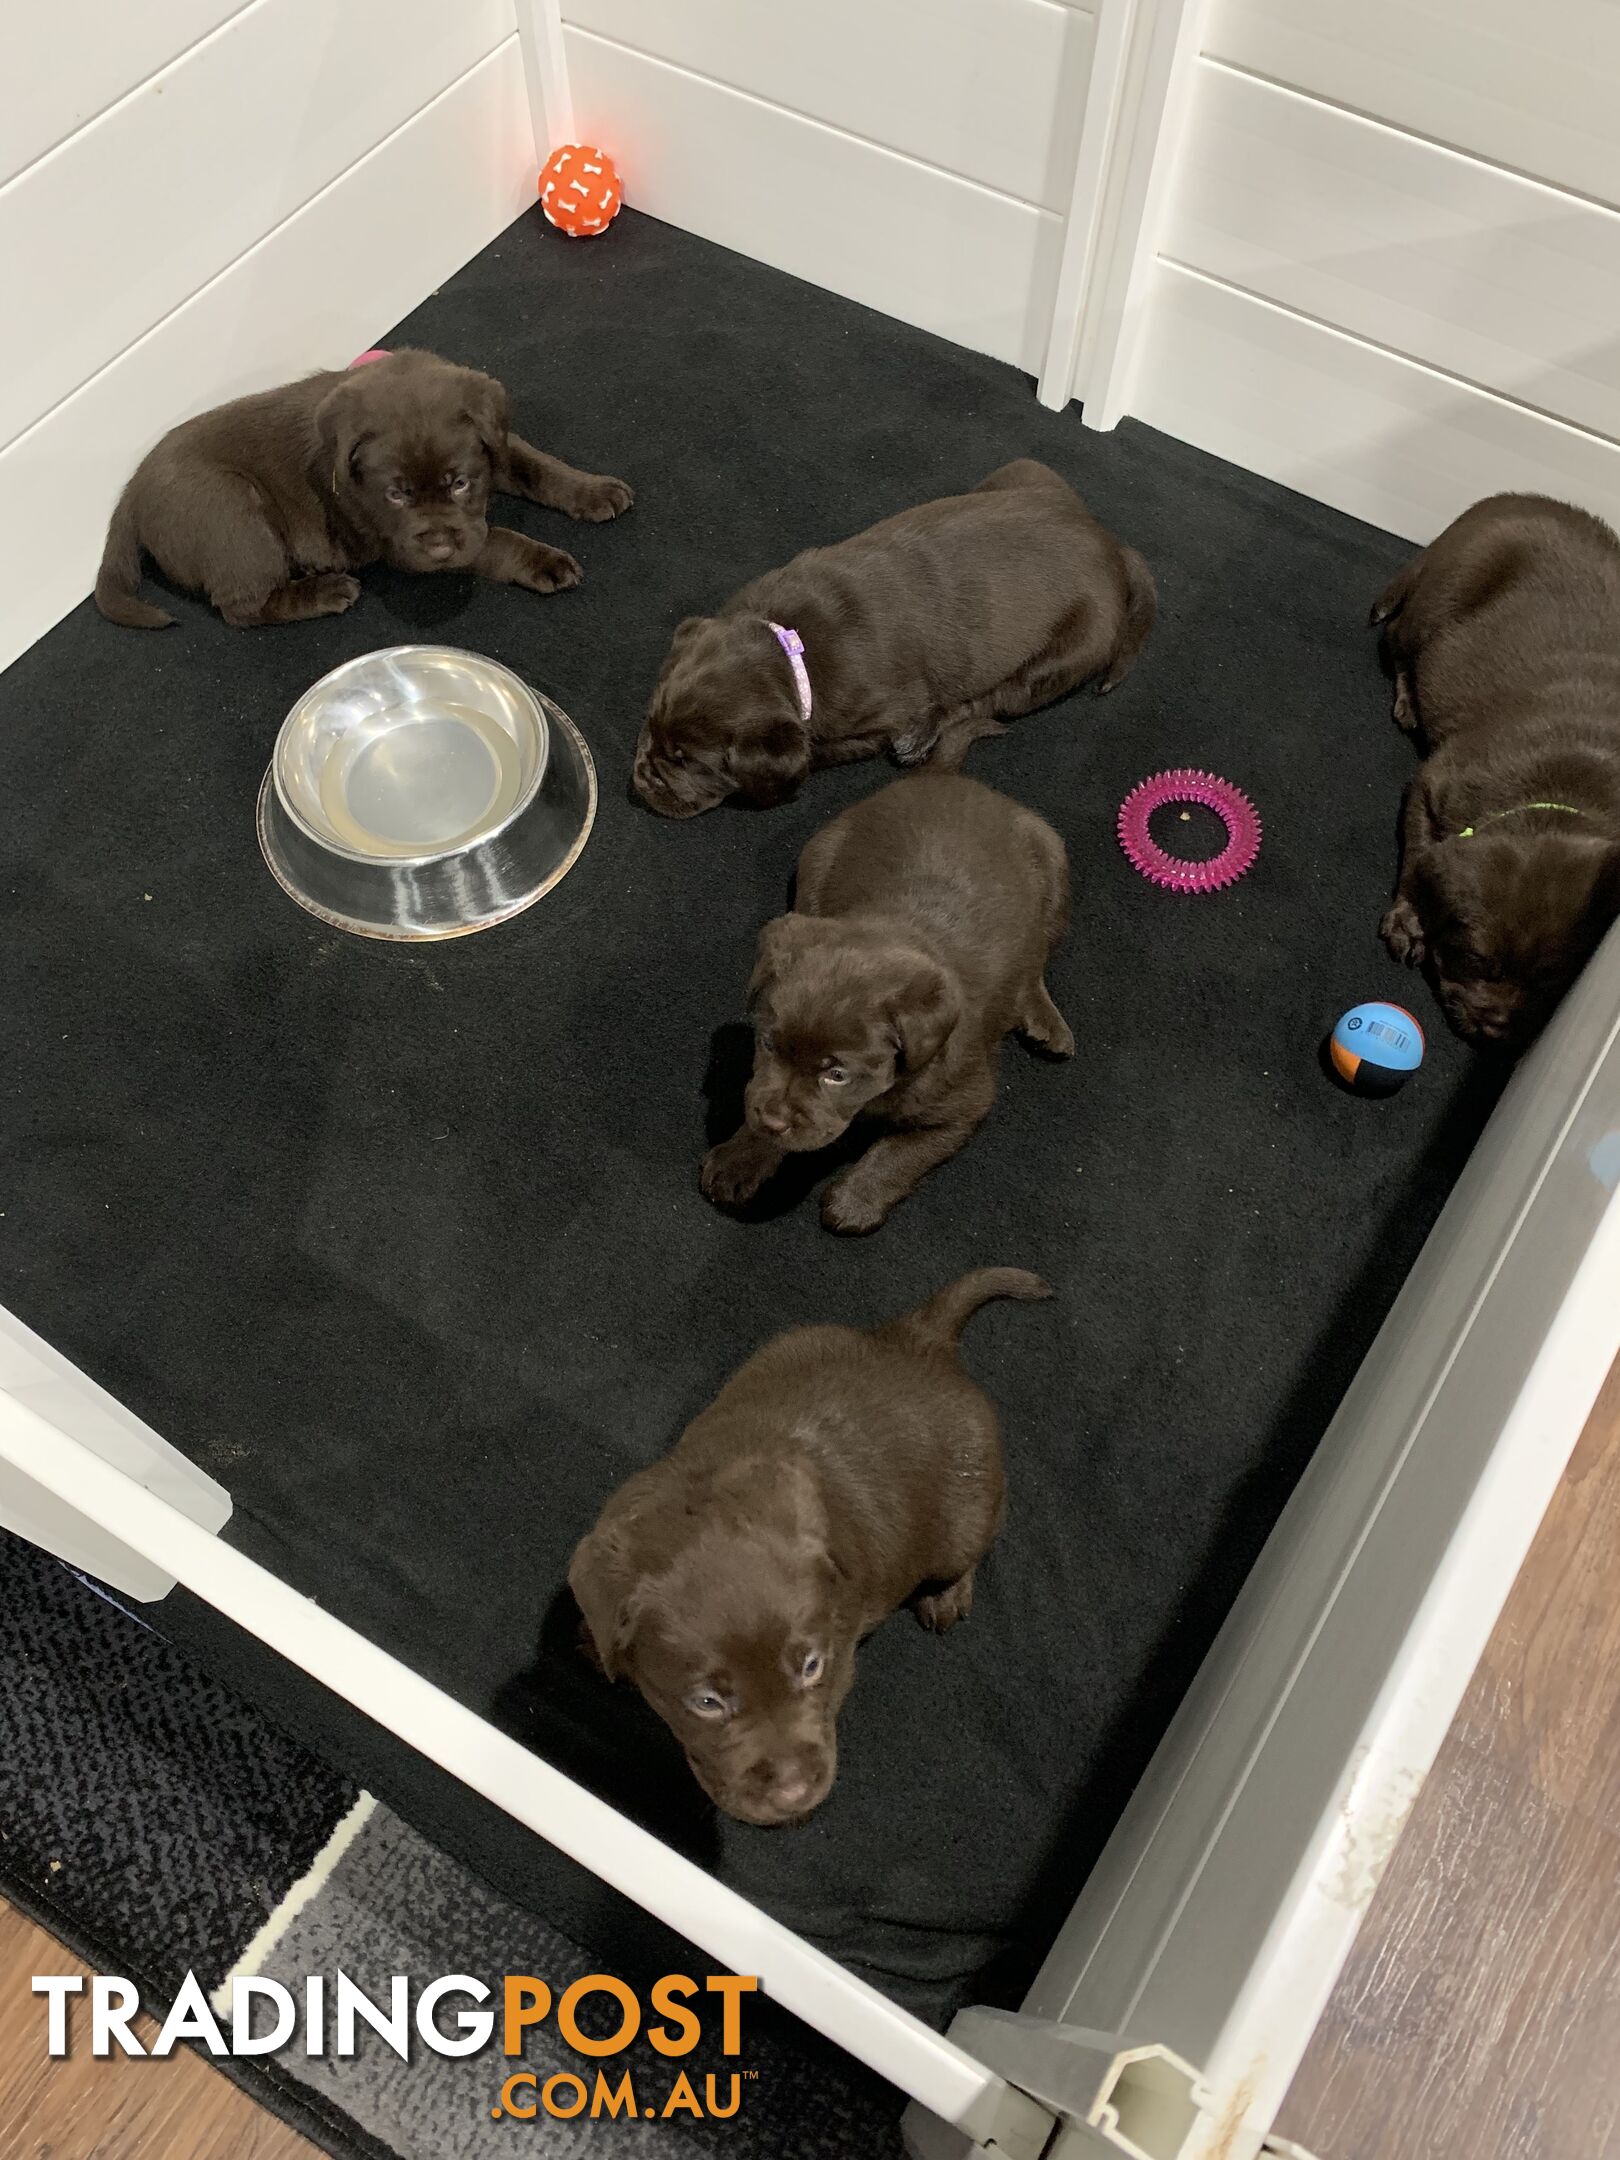 Chocolate Labrador Puppies